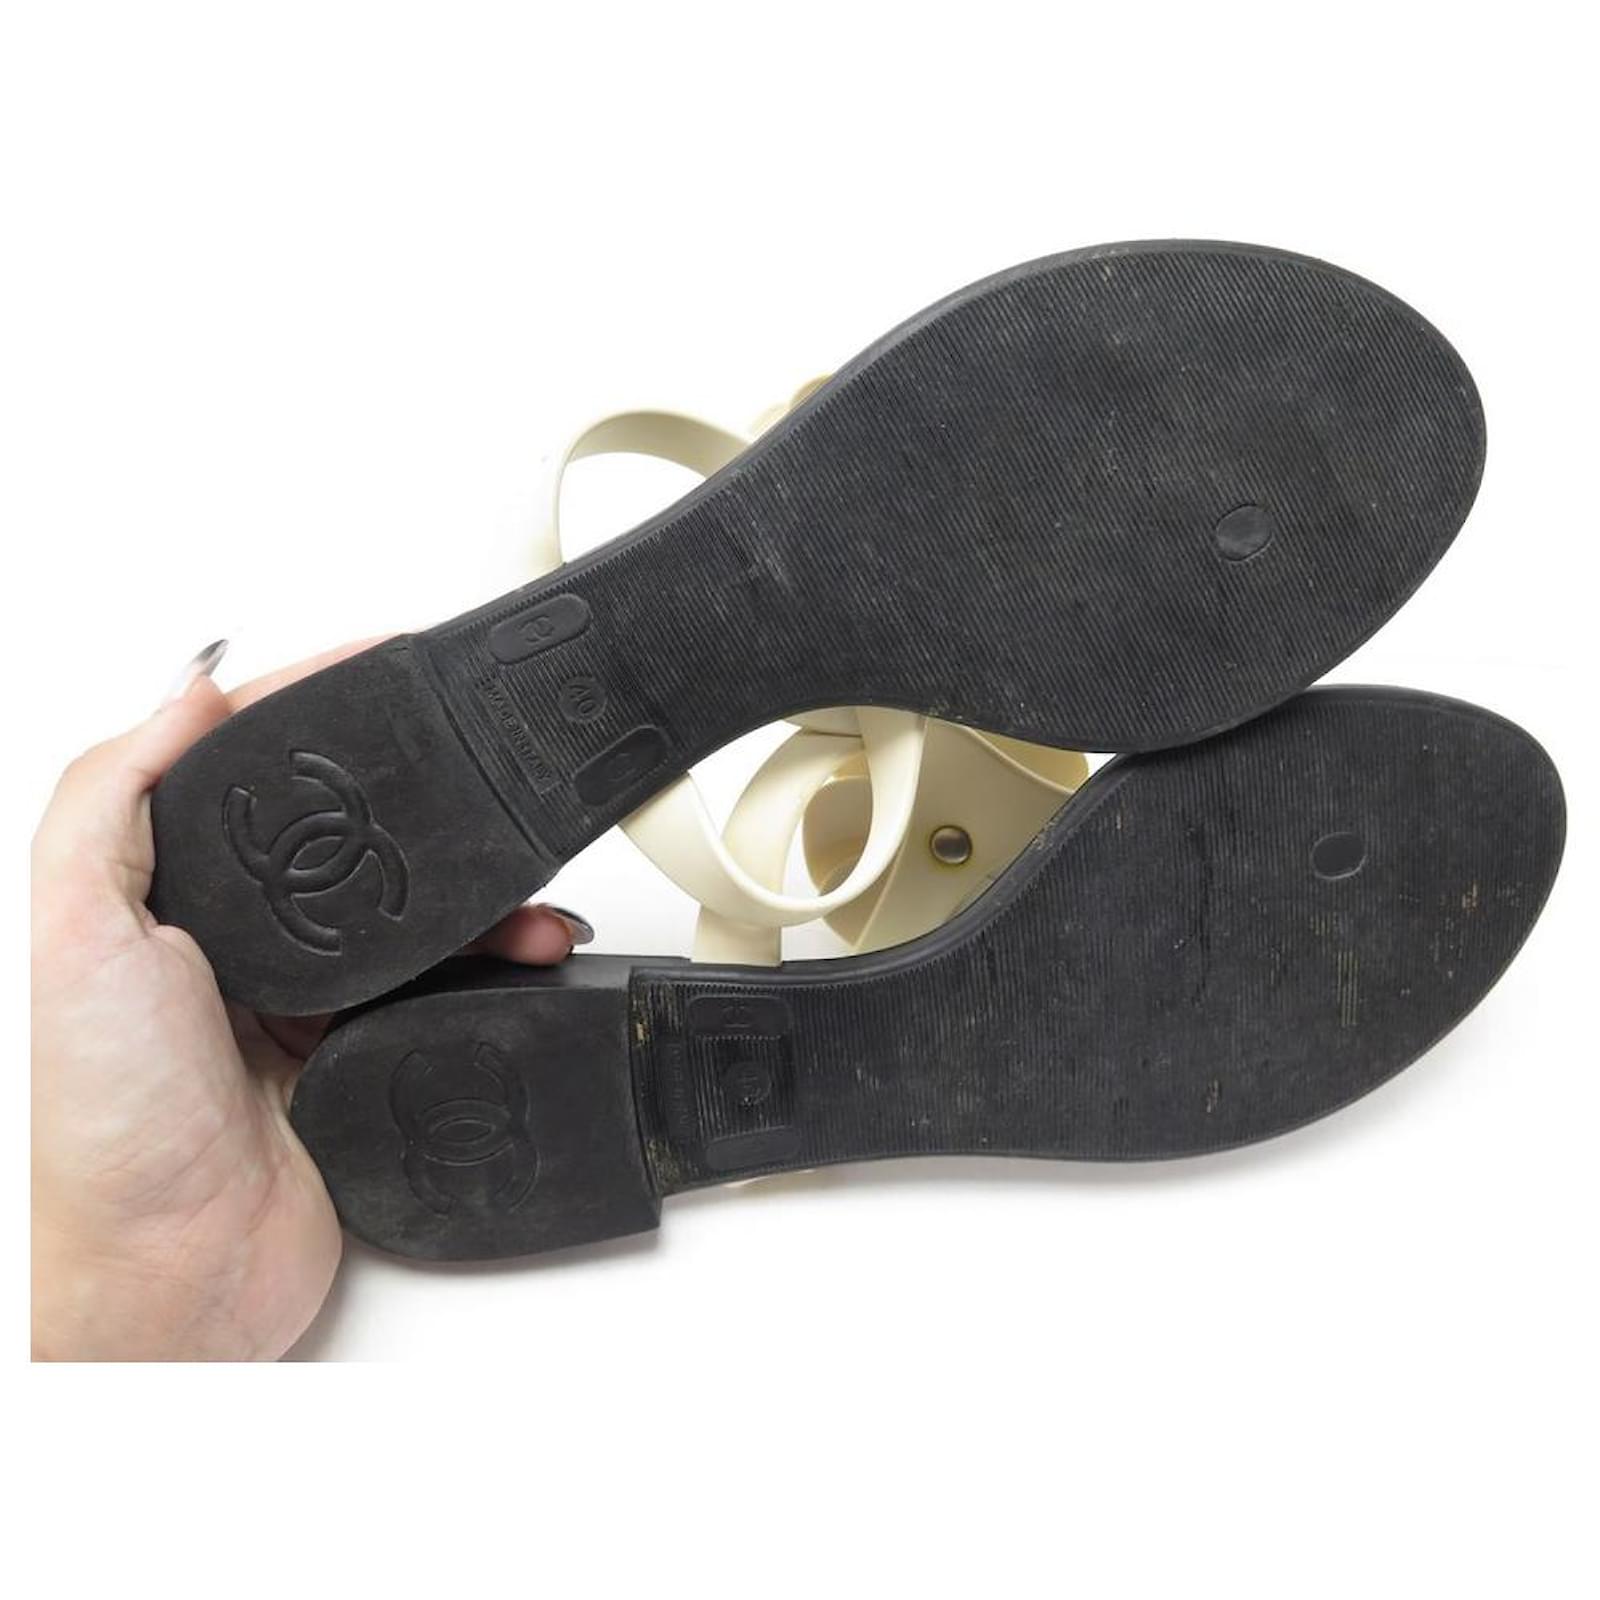 Chanel Black Rubber Camellia Flower Thong Sandals Size 6.5/37